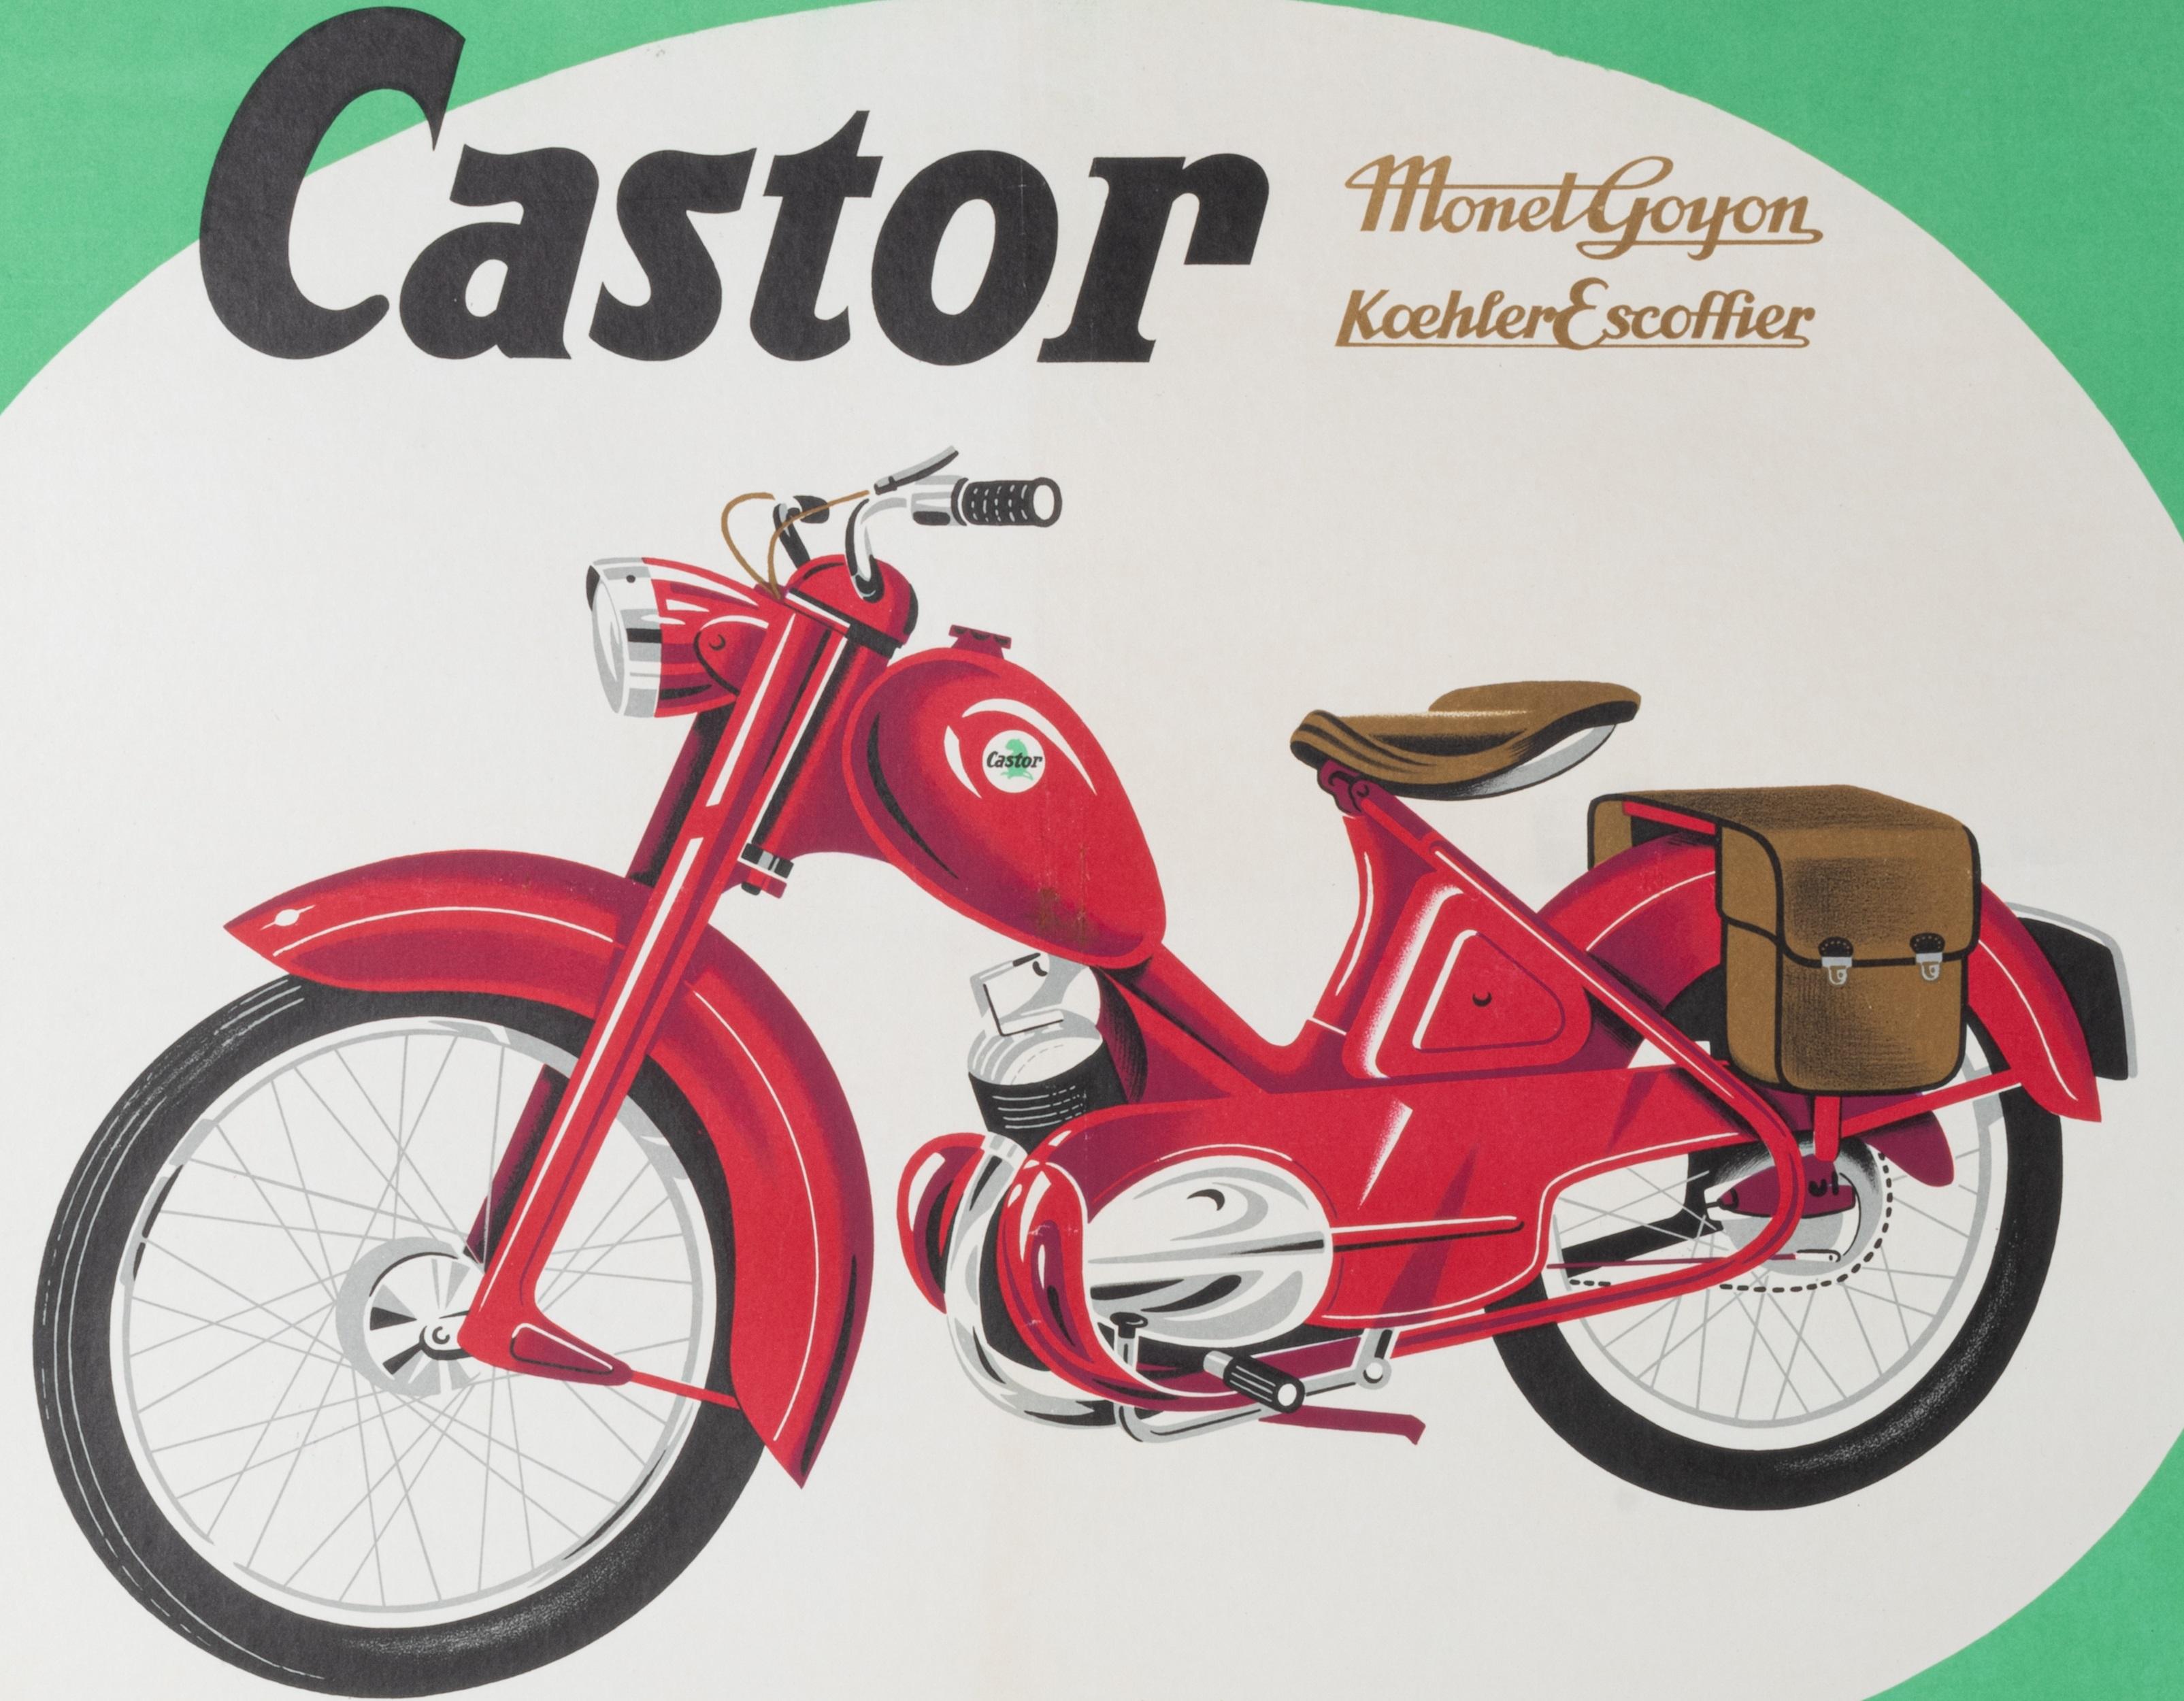 French Gouju Amalric, Original Motocycle Poster, Castor, Monet Goyon Koehler, 1956 For Sale